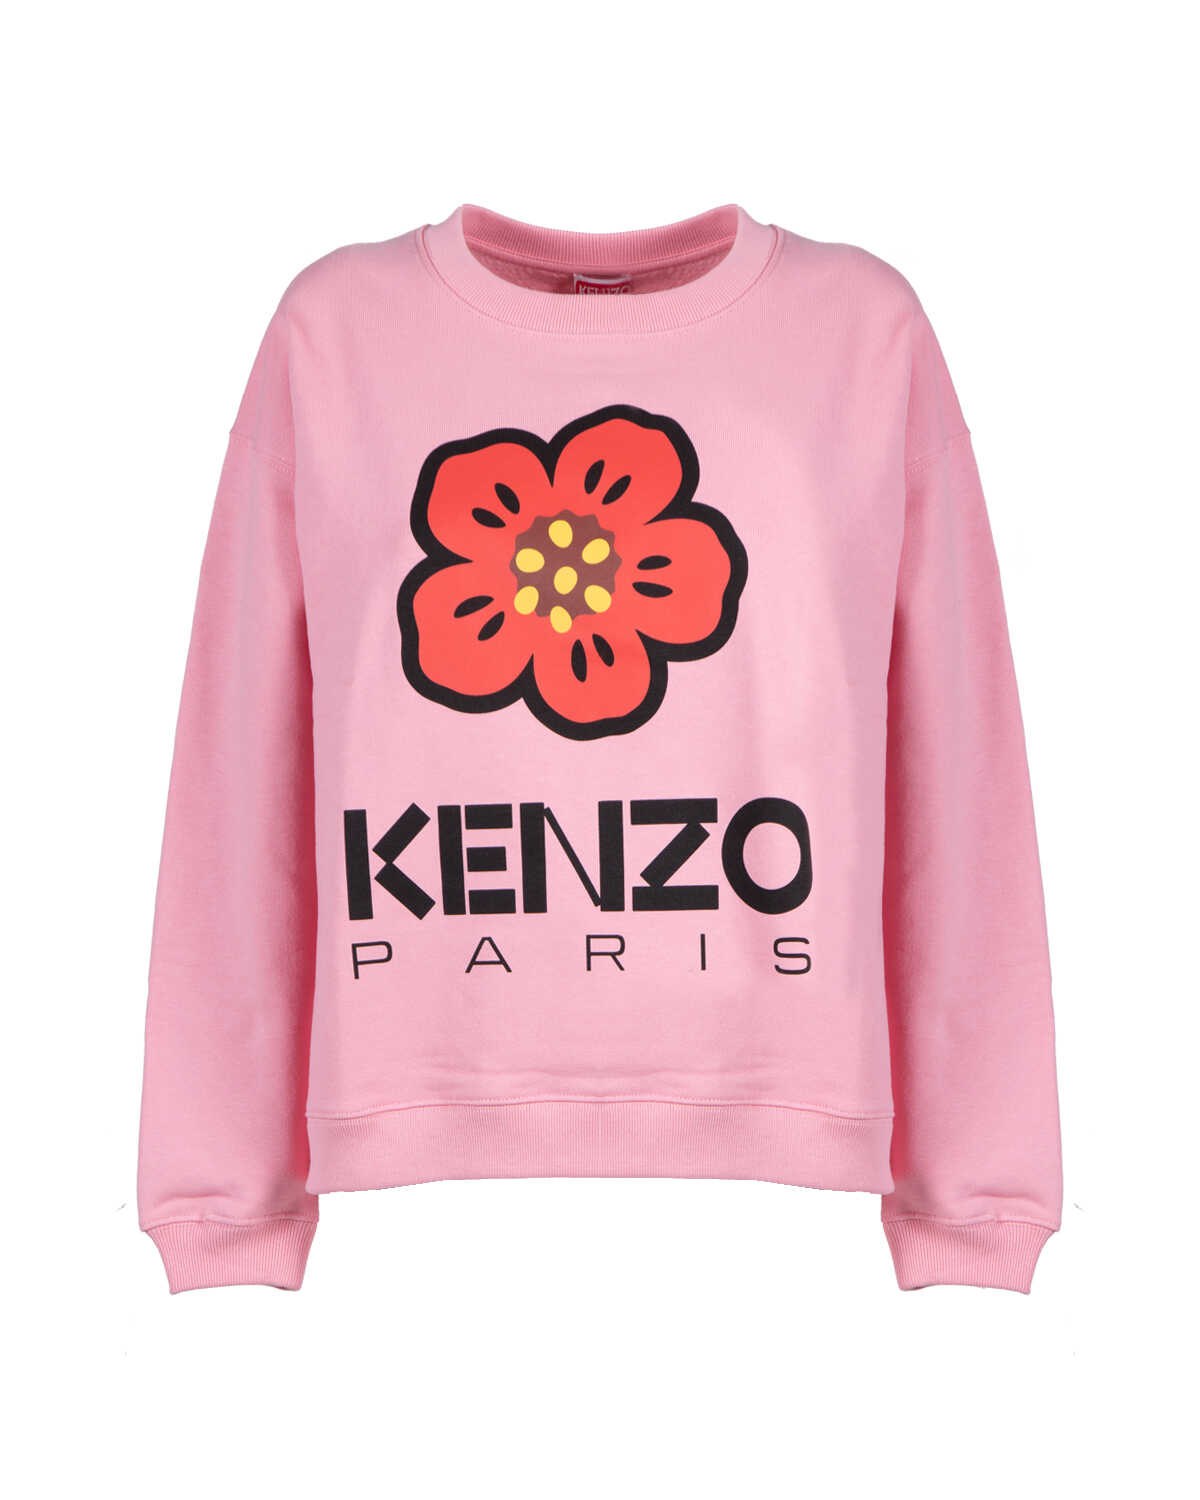 Kenzo Kenzo Paris Regular Sweatshirt ROSA